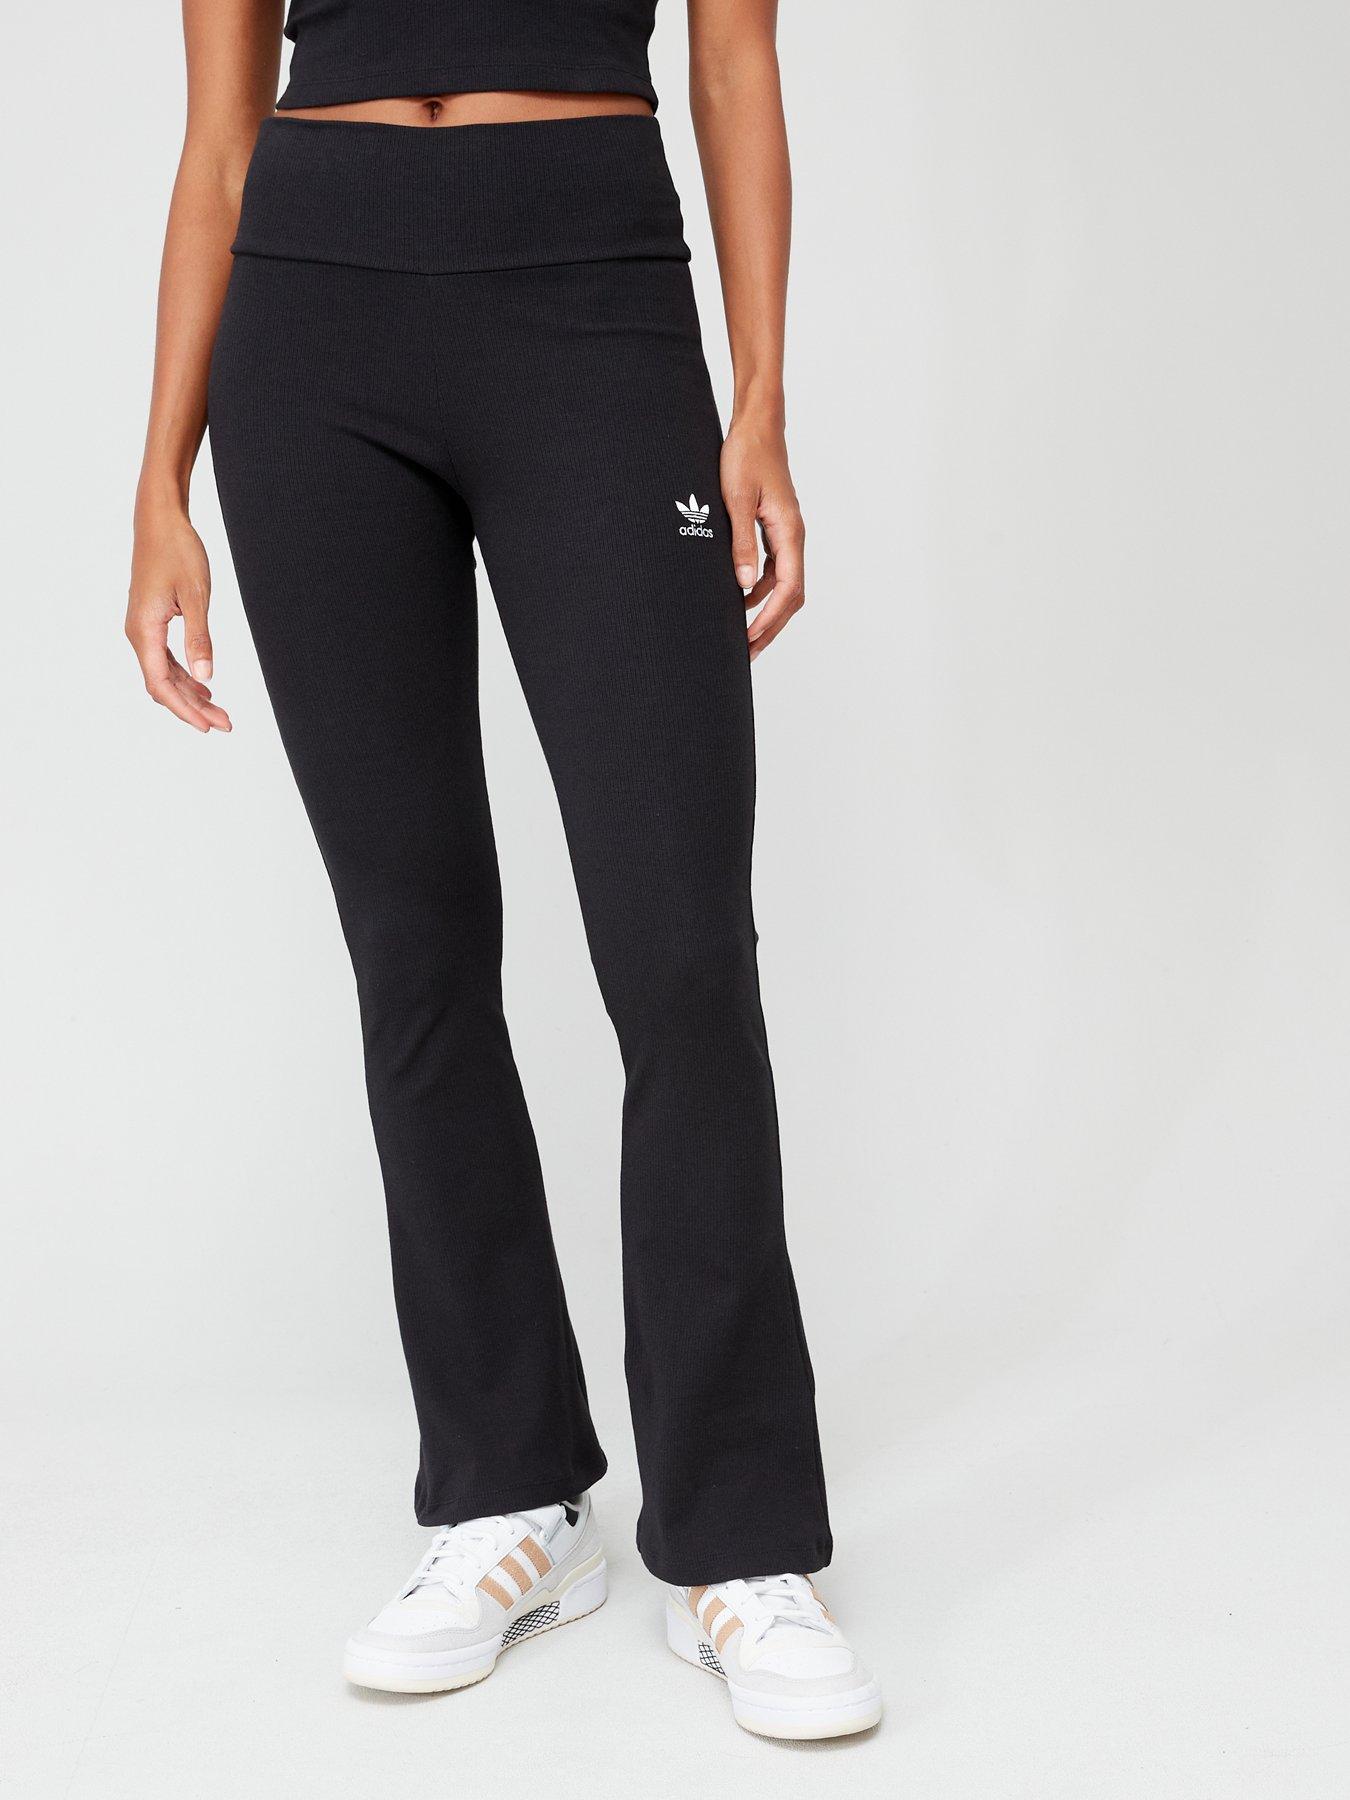 Vintage Adidas Womens Wet Look Track Pants Black Gold Trefoil Logo Shinny  Size S